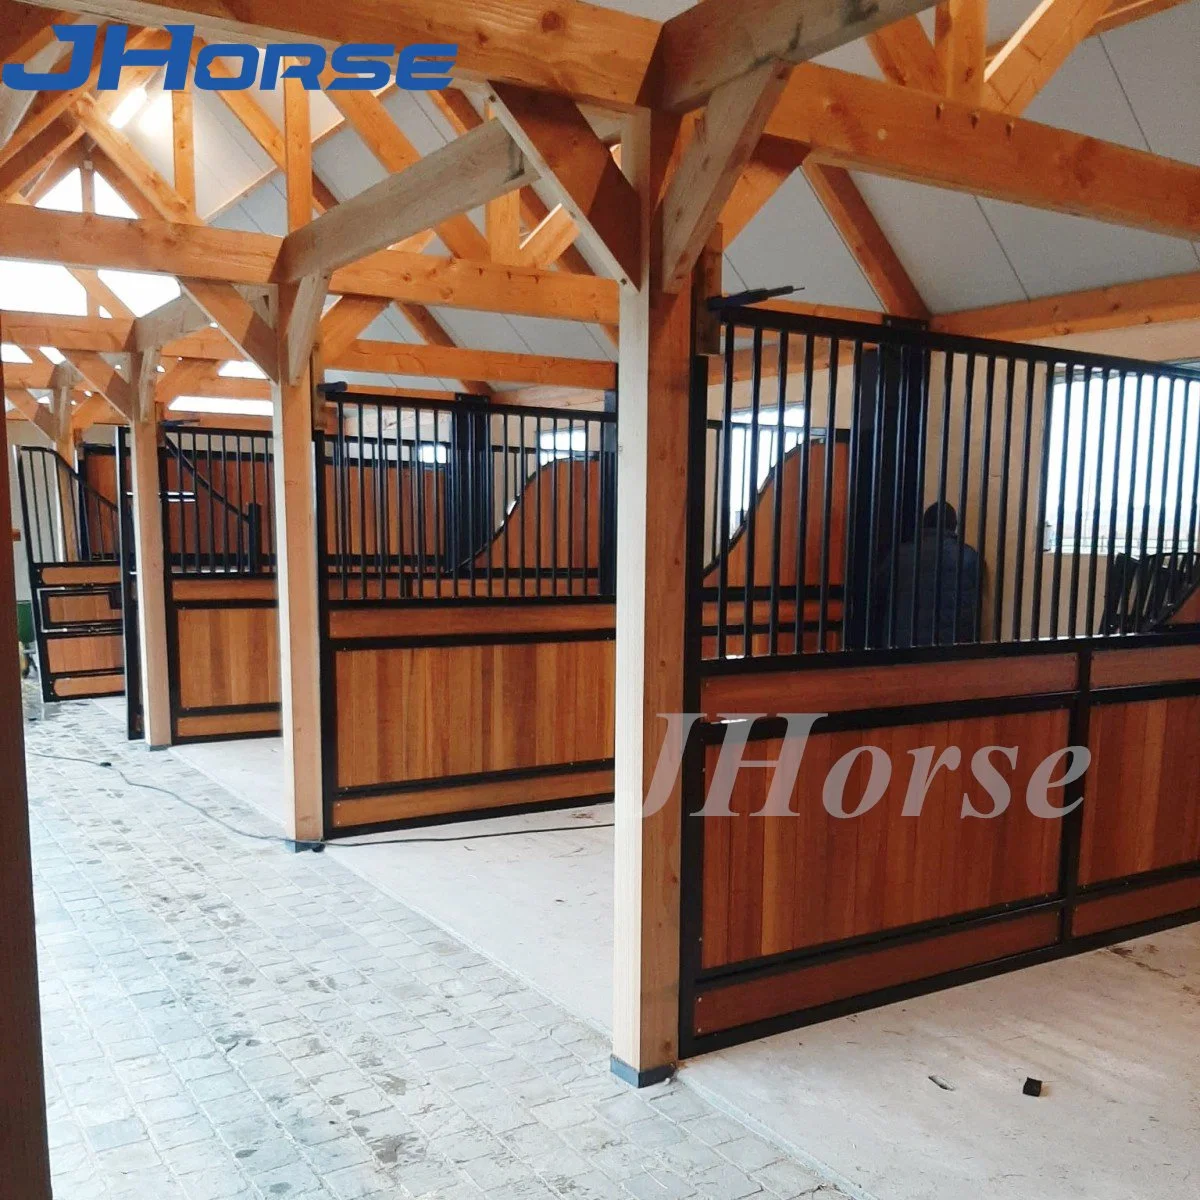 أفضل جودة Equine Stall Stable Doors Equipment System Products لـ الخيول